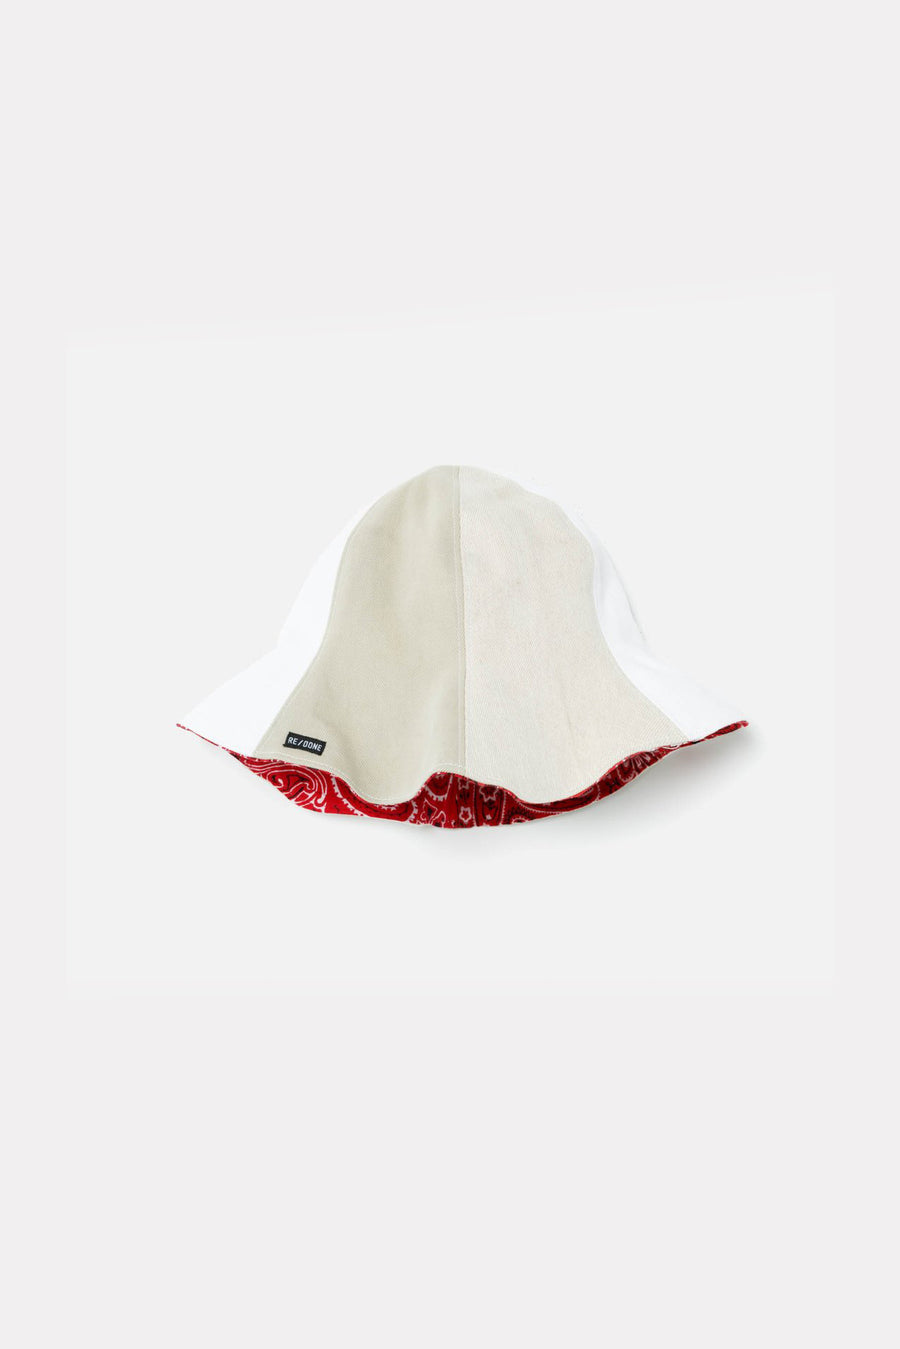 70s Reversible Tulip Hat Beige/Red - blueandcream